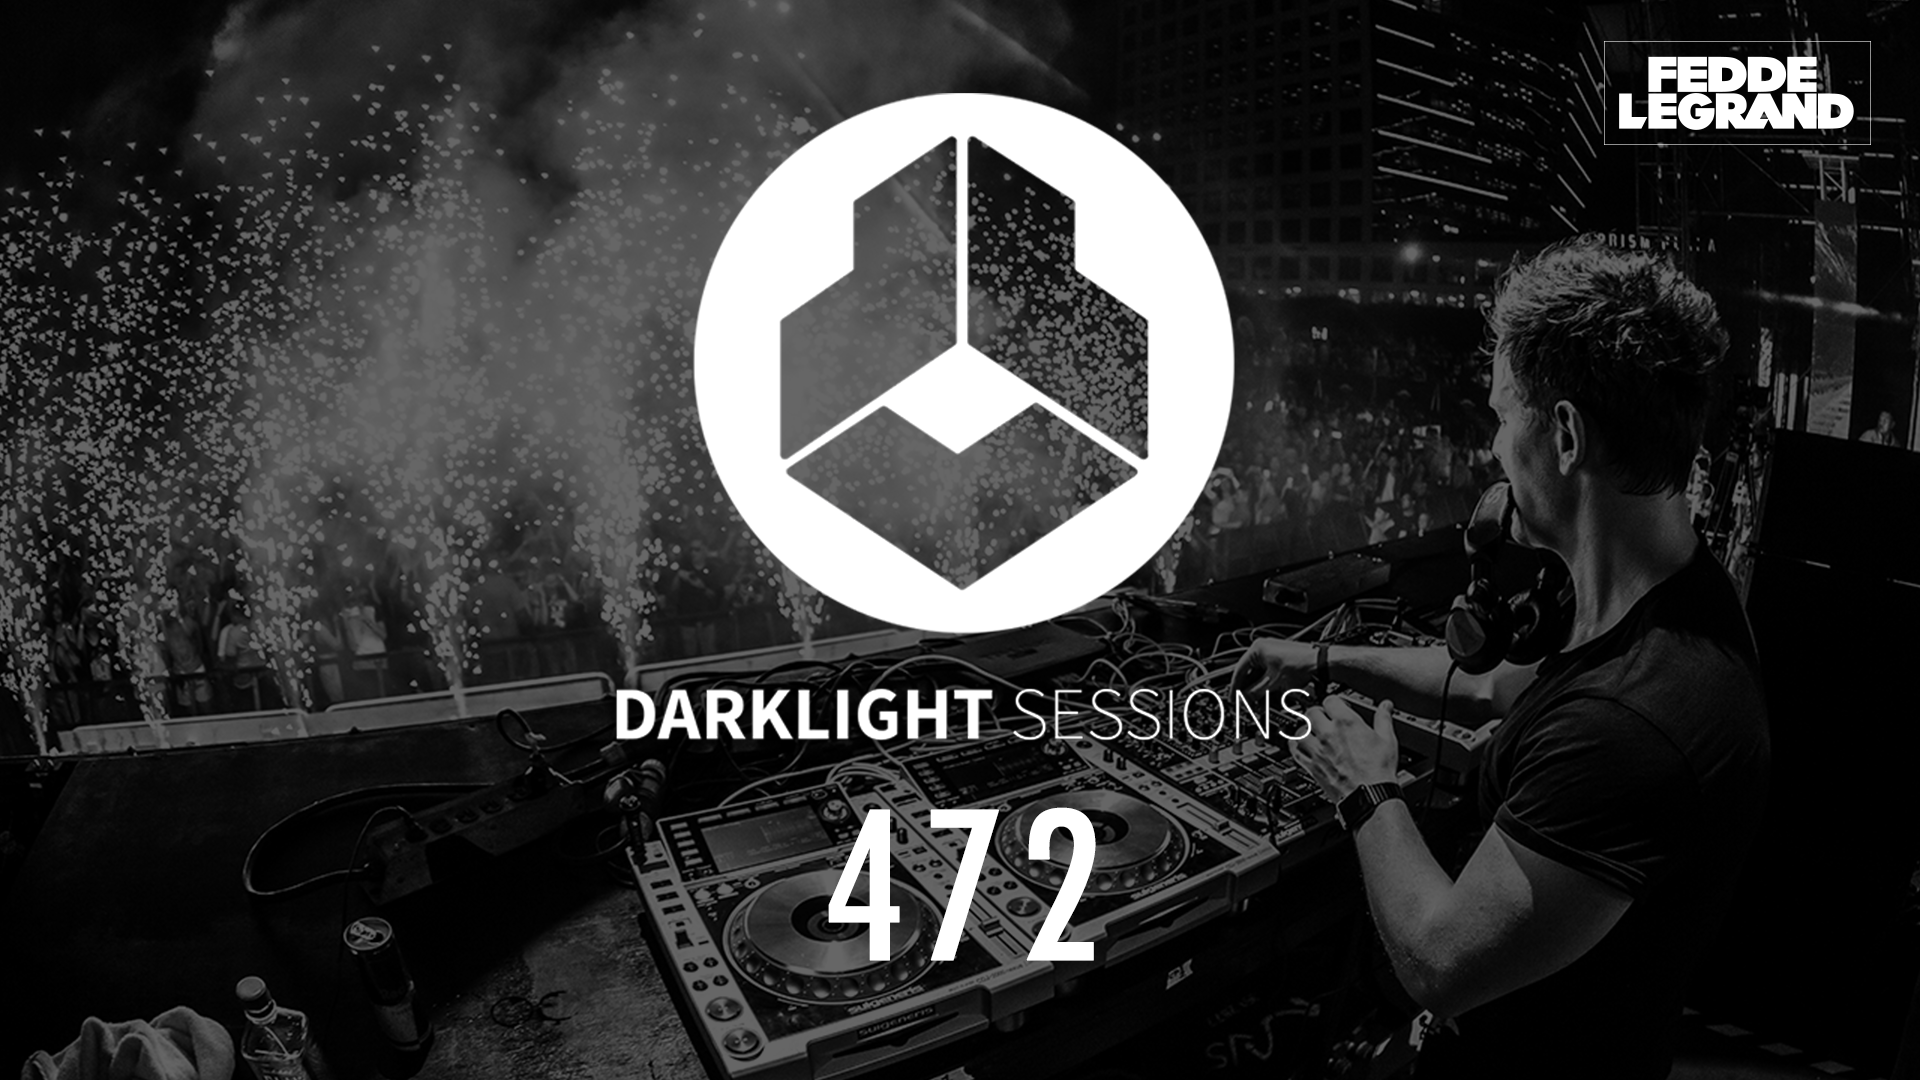 Darklight Sessions 472